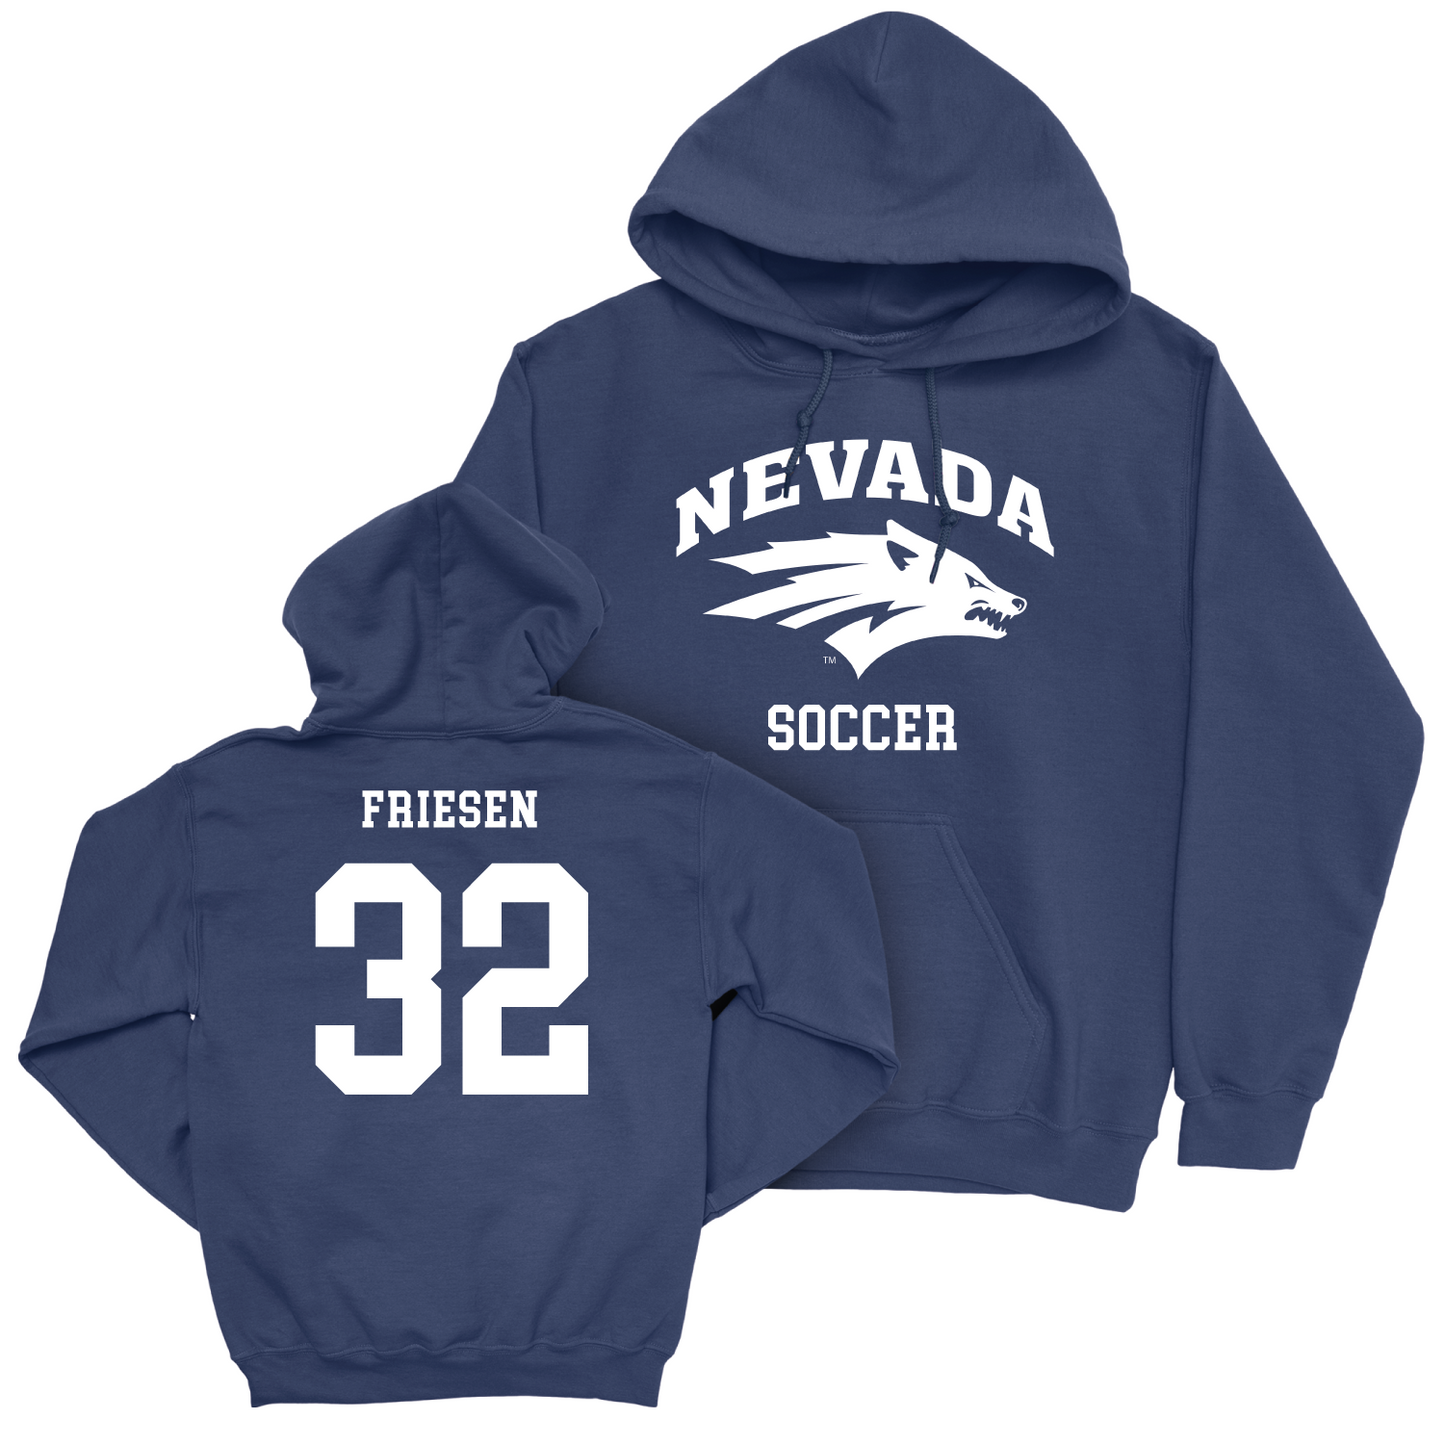 Nevada Women's Soccer Navy Staple Hoodie - Alexis Friesen